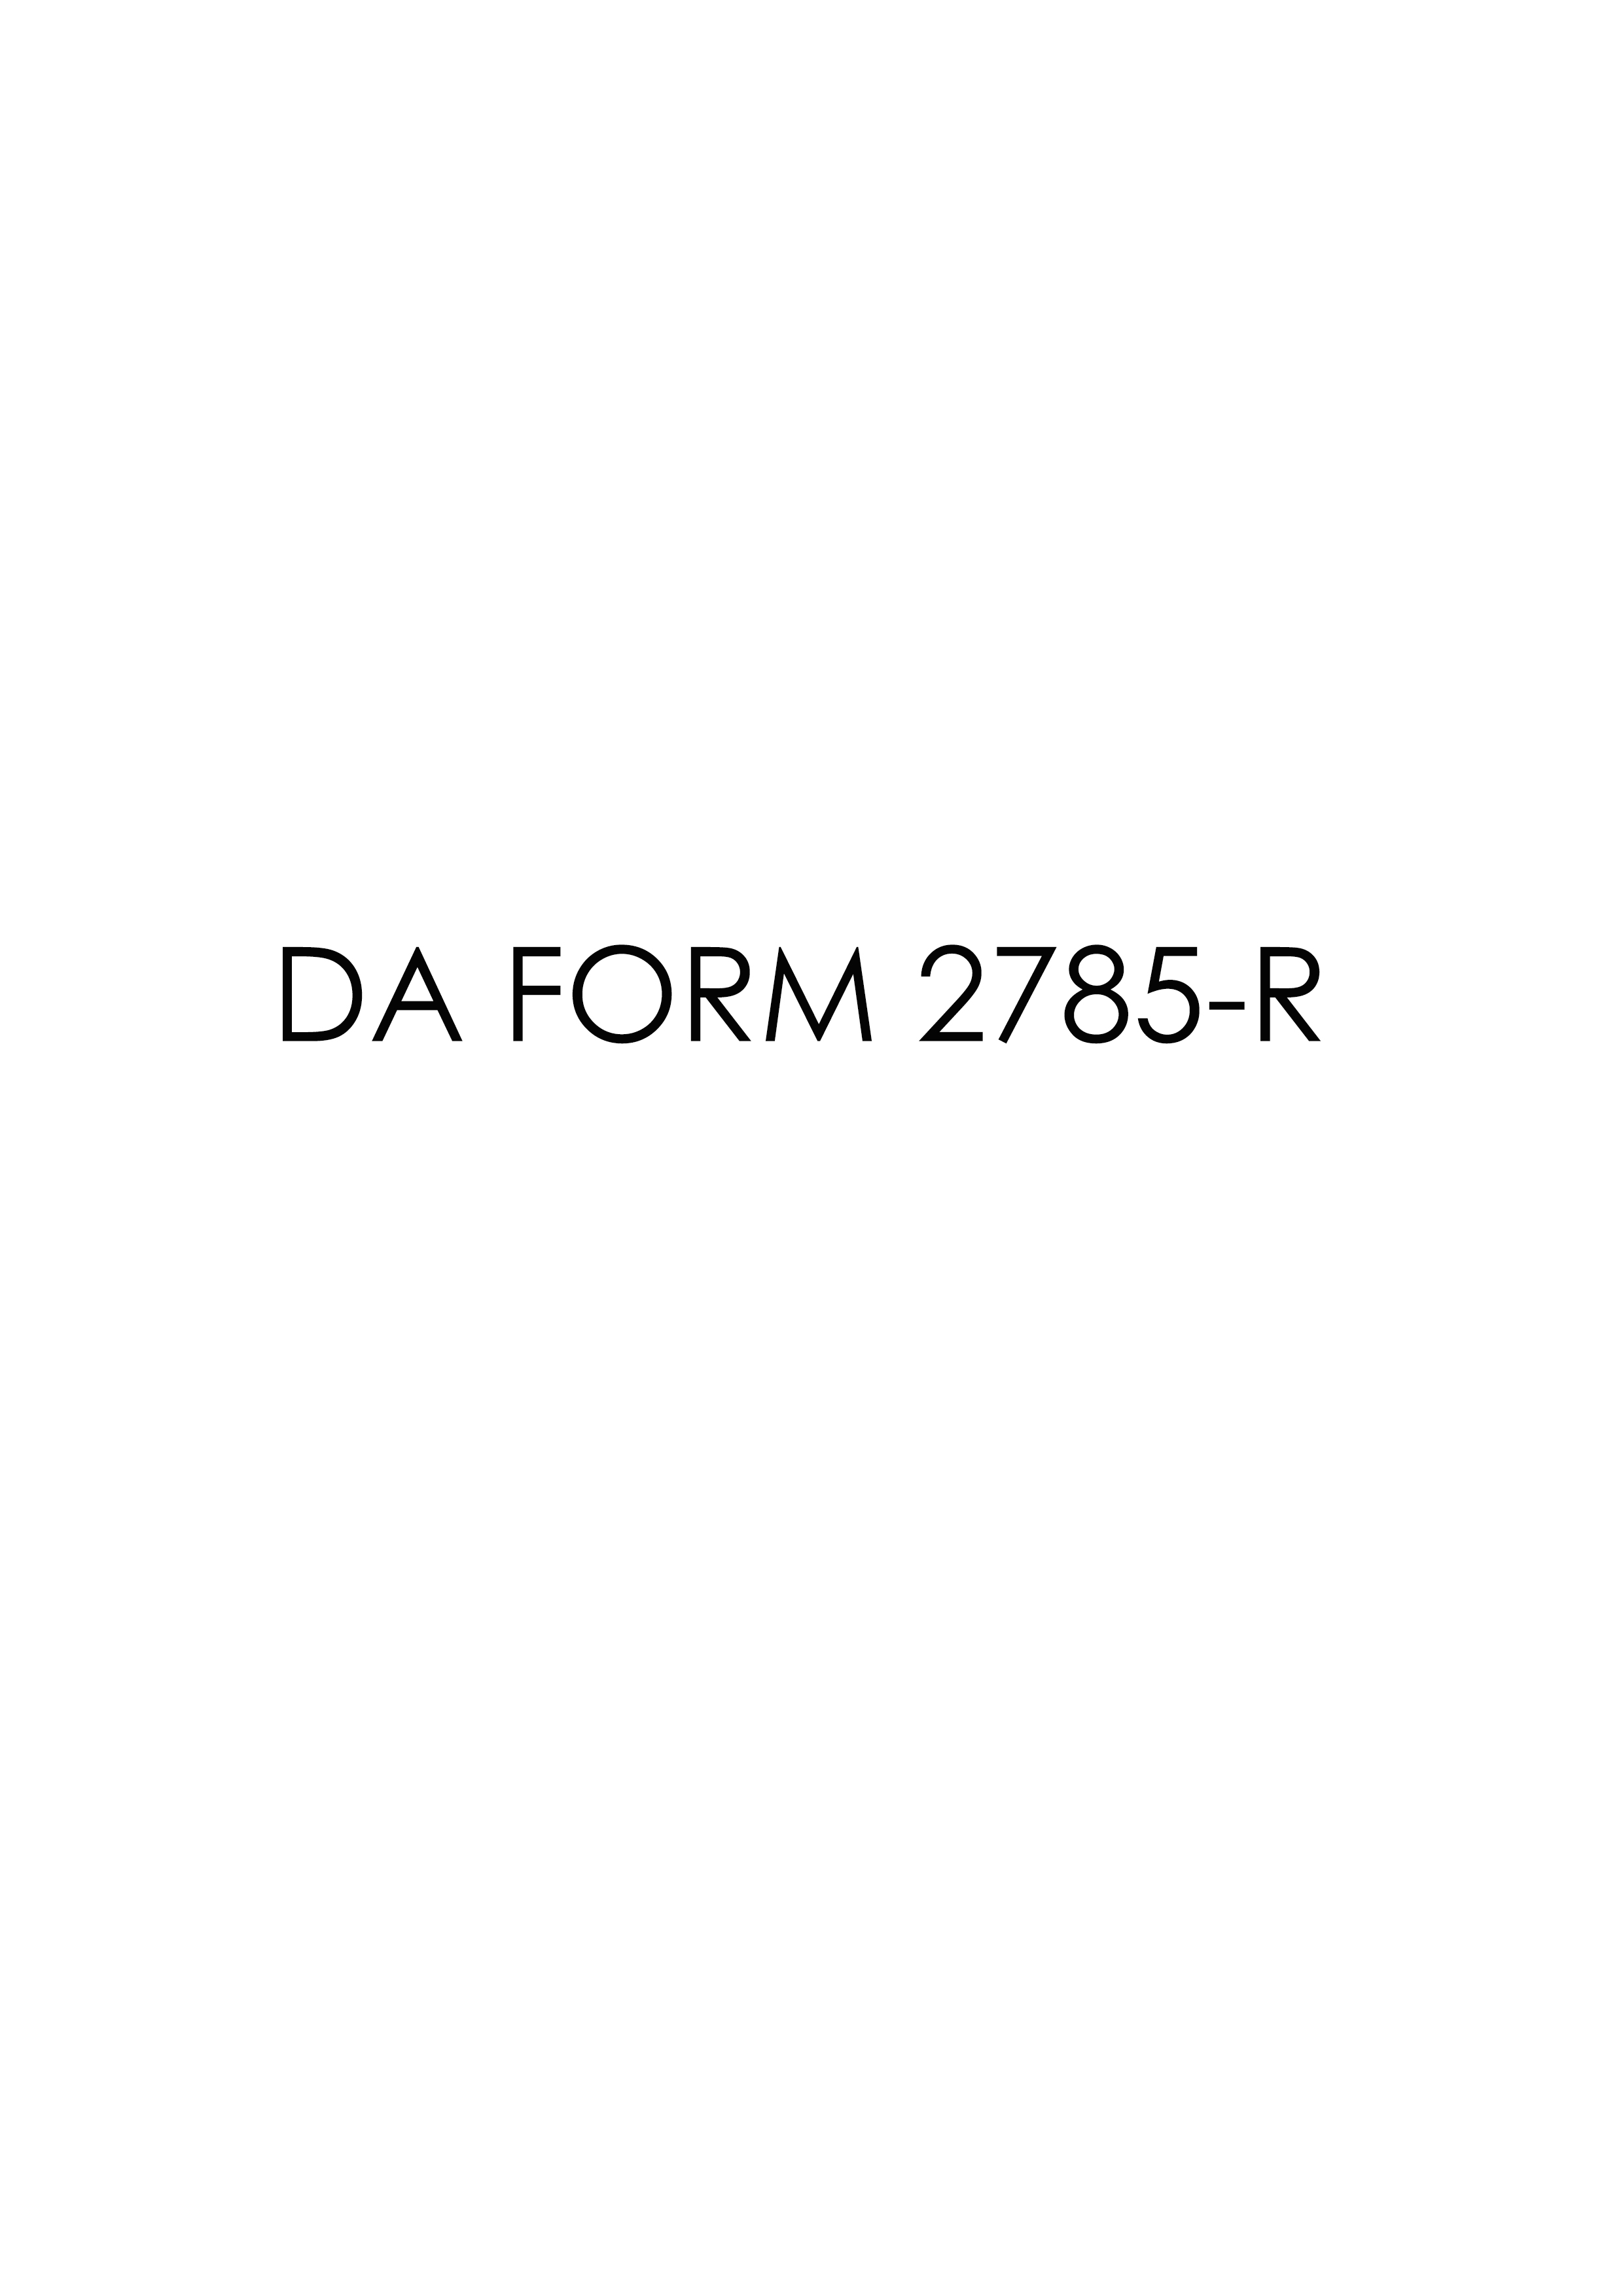 da Form 2785-R fillable